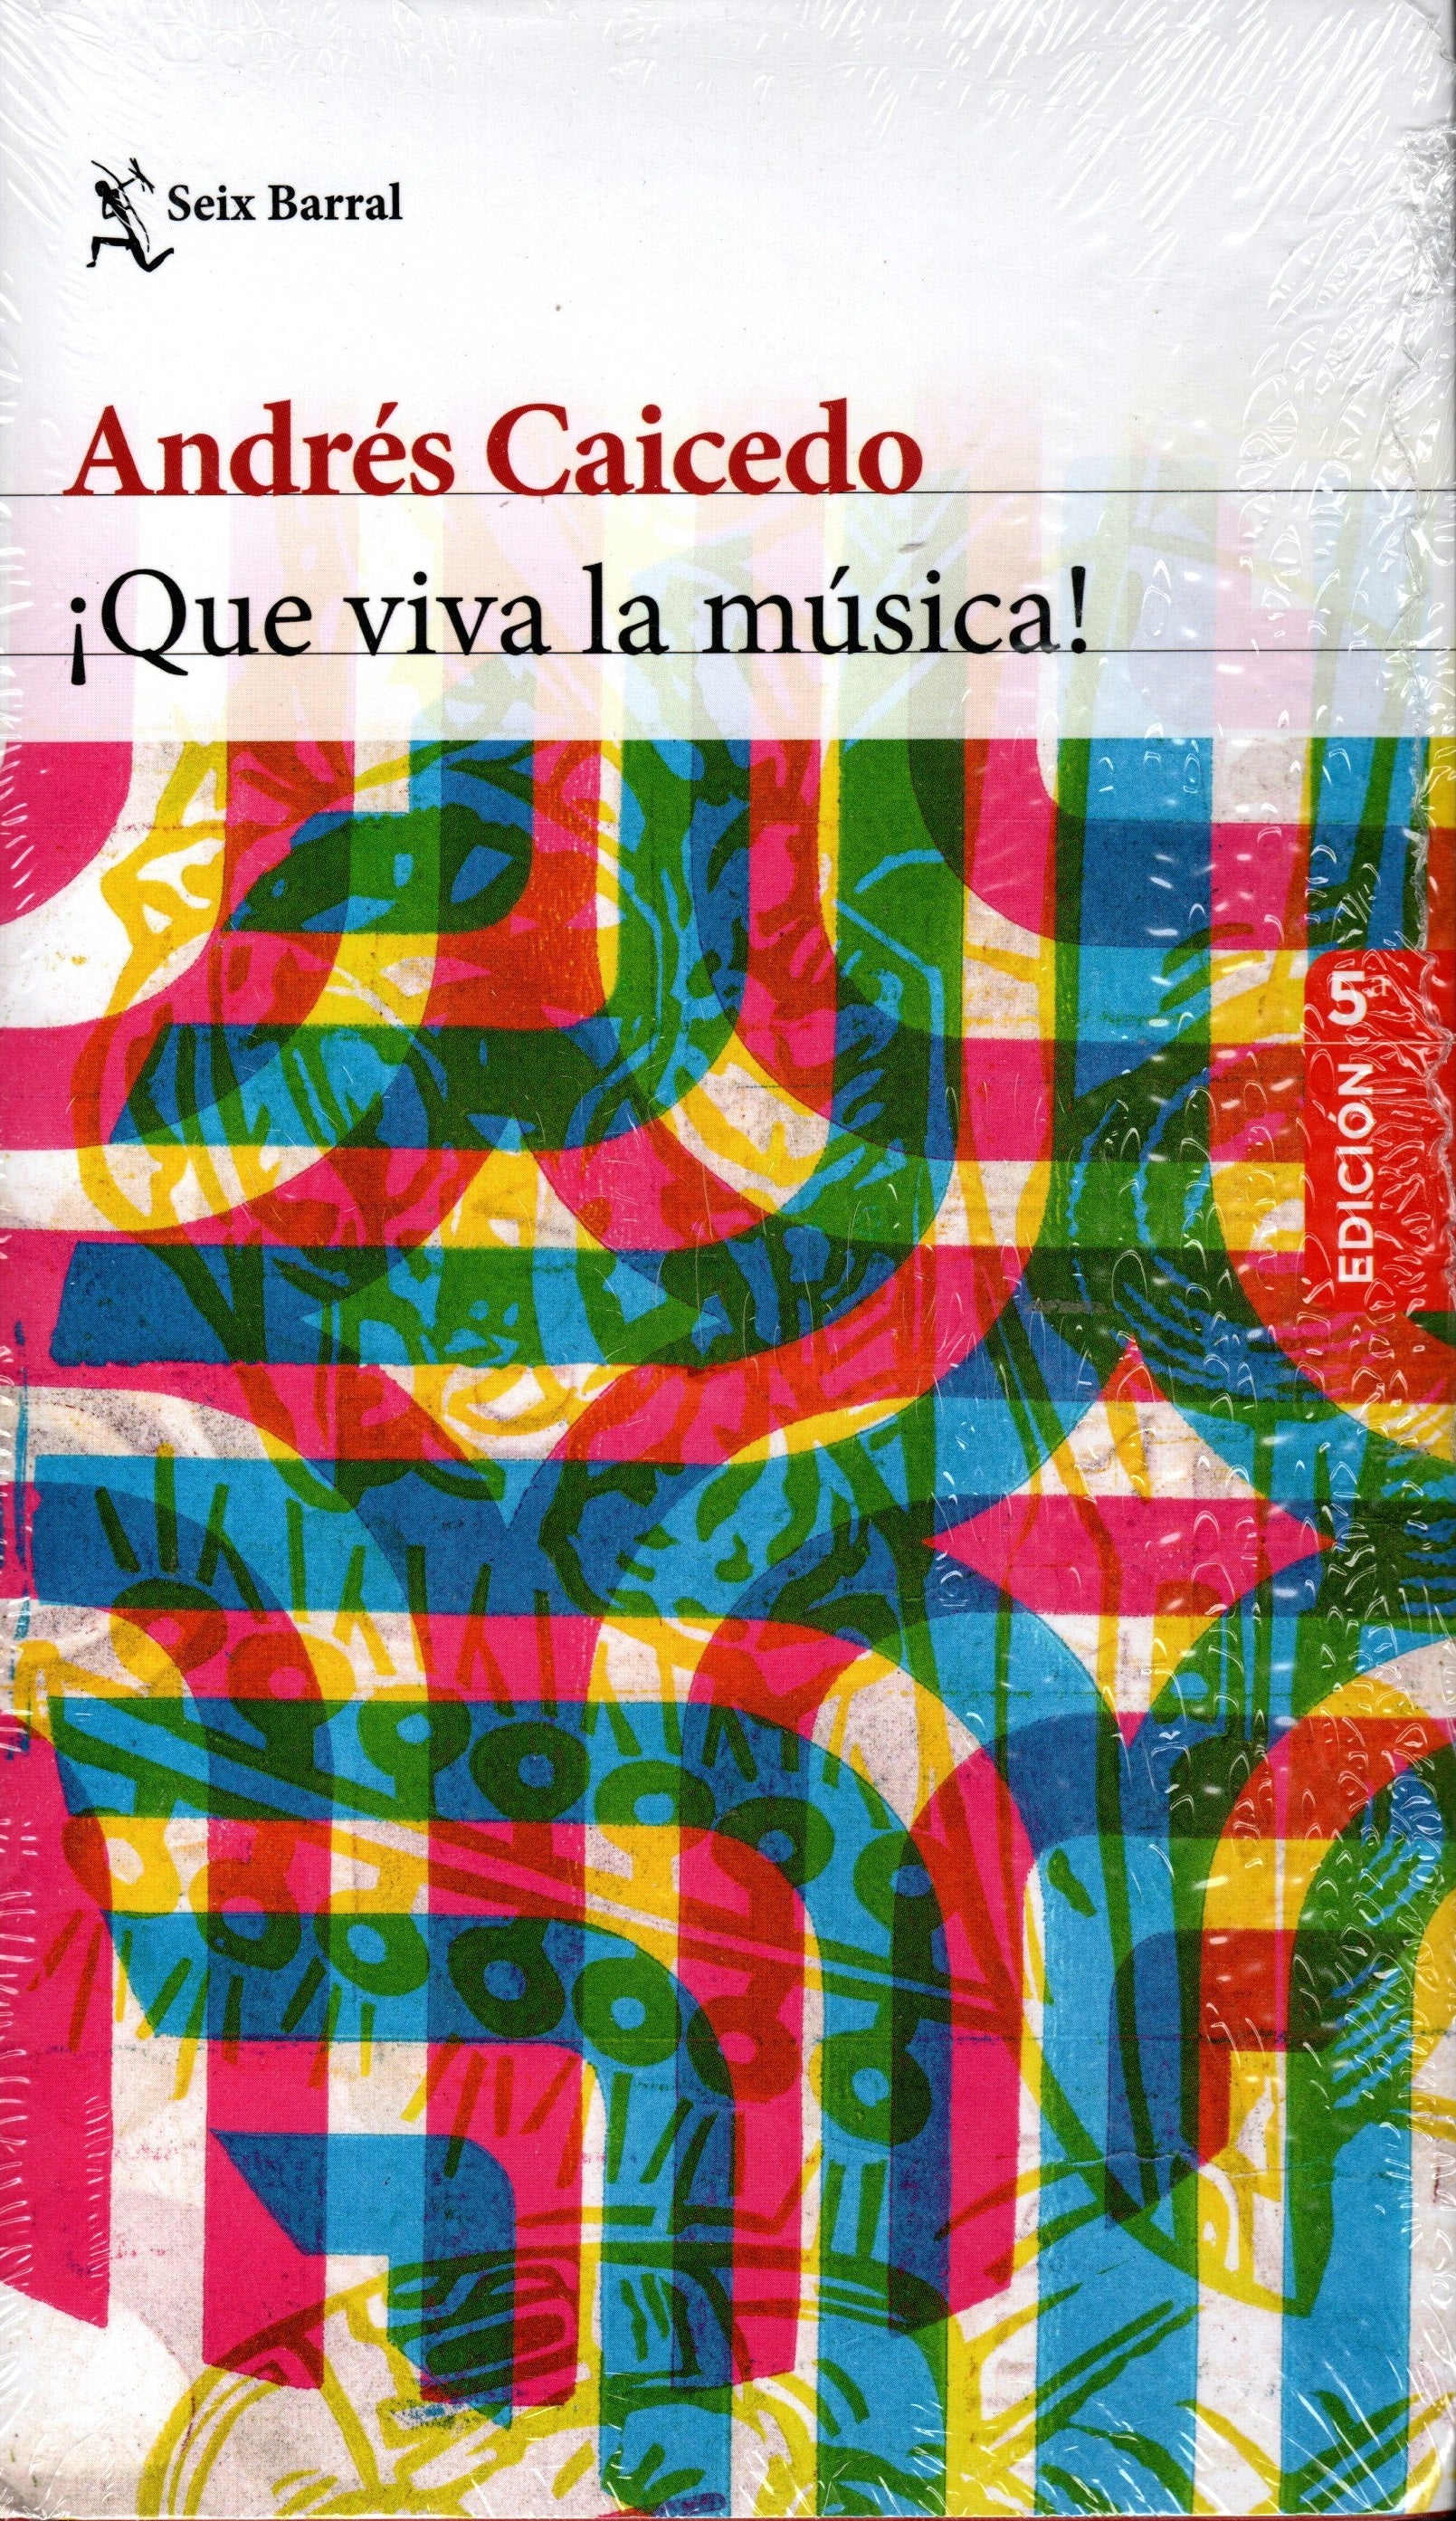 Libro Andrés Caicedo - ¡Que viva la música!